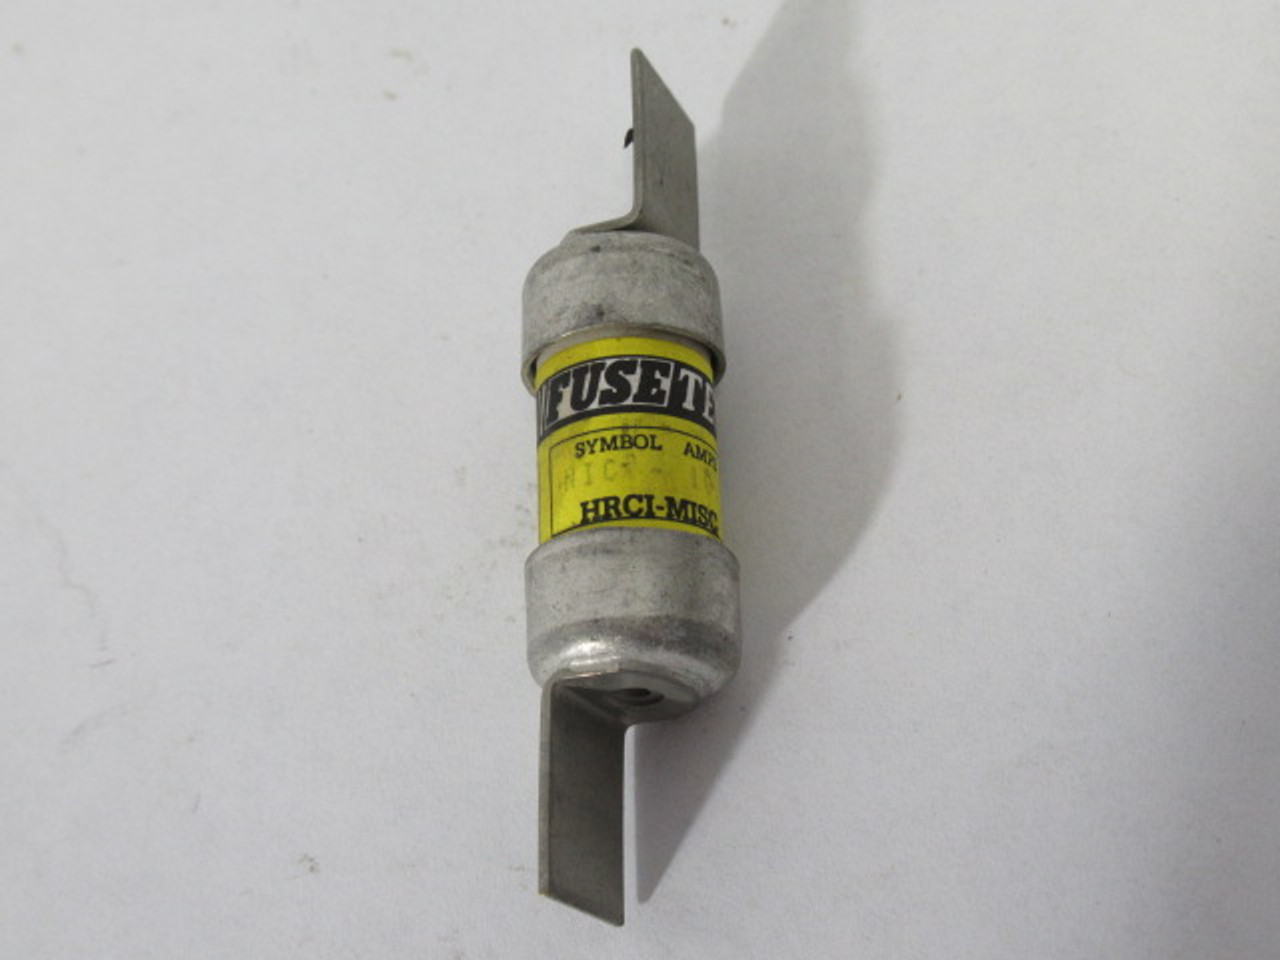 Fusetek NIC-10 Cartridge Fuse 10A 600VAC USED